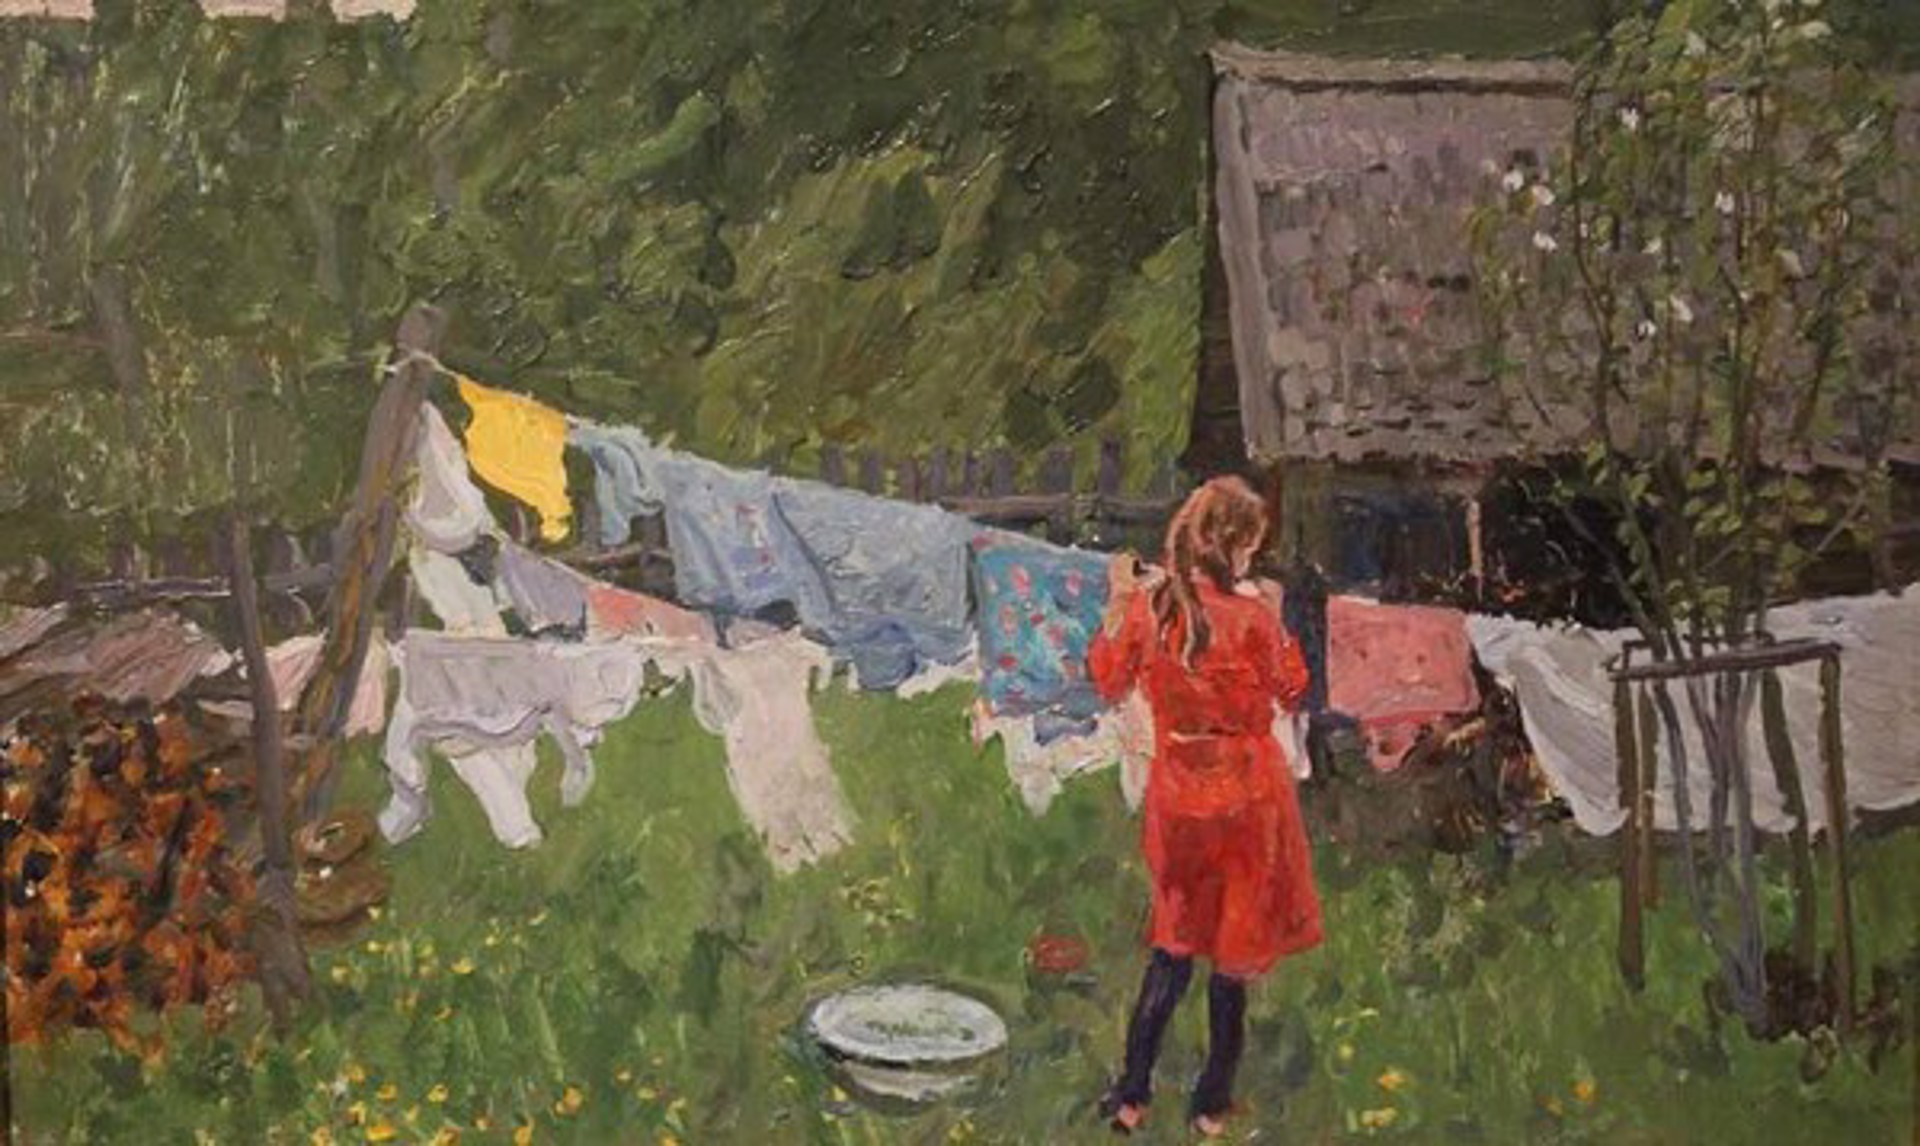 Hanging Laundry by Sergei Tkachev